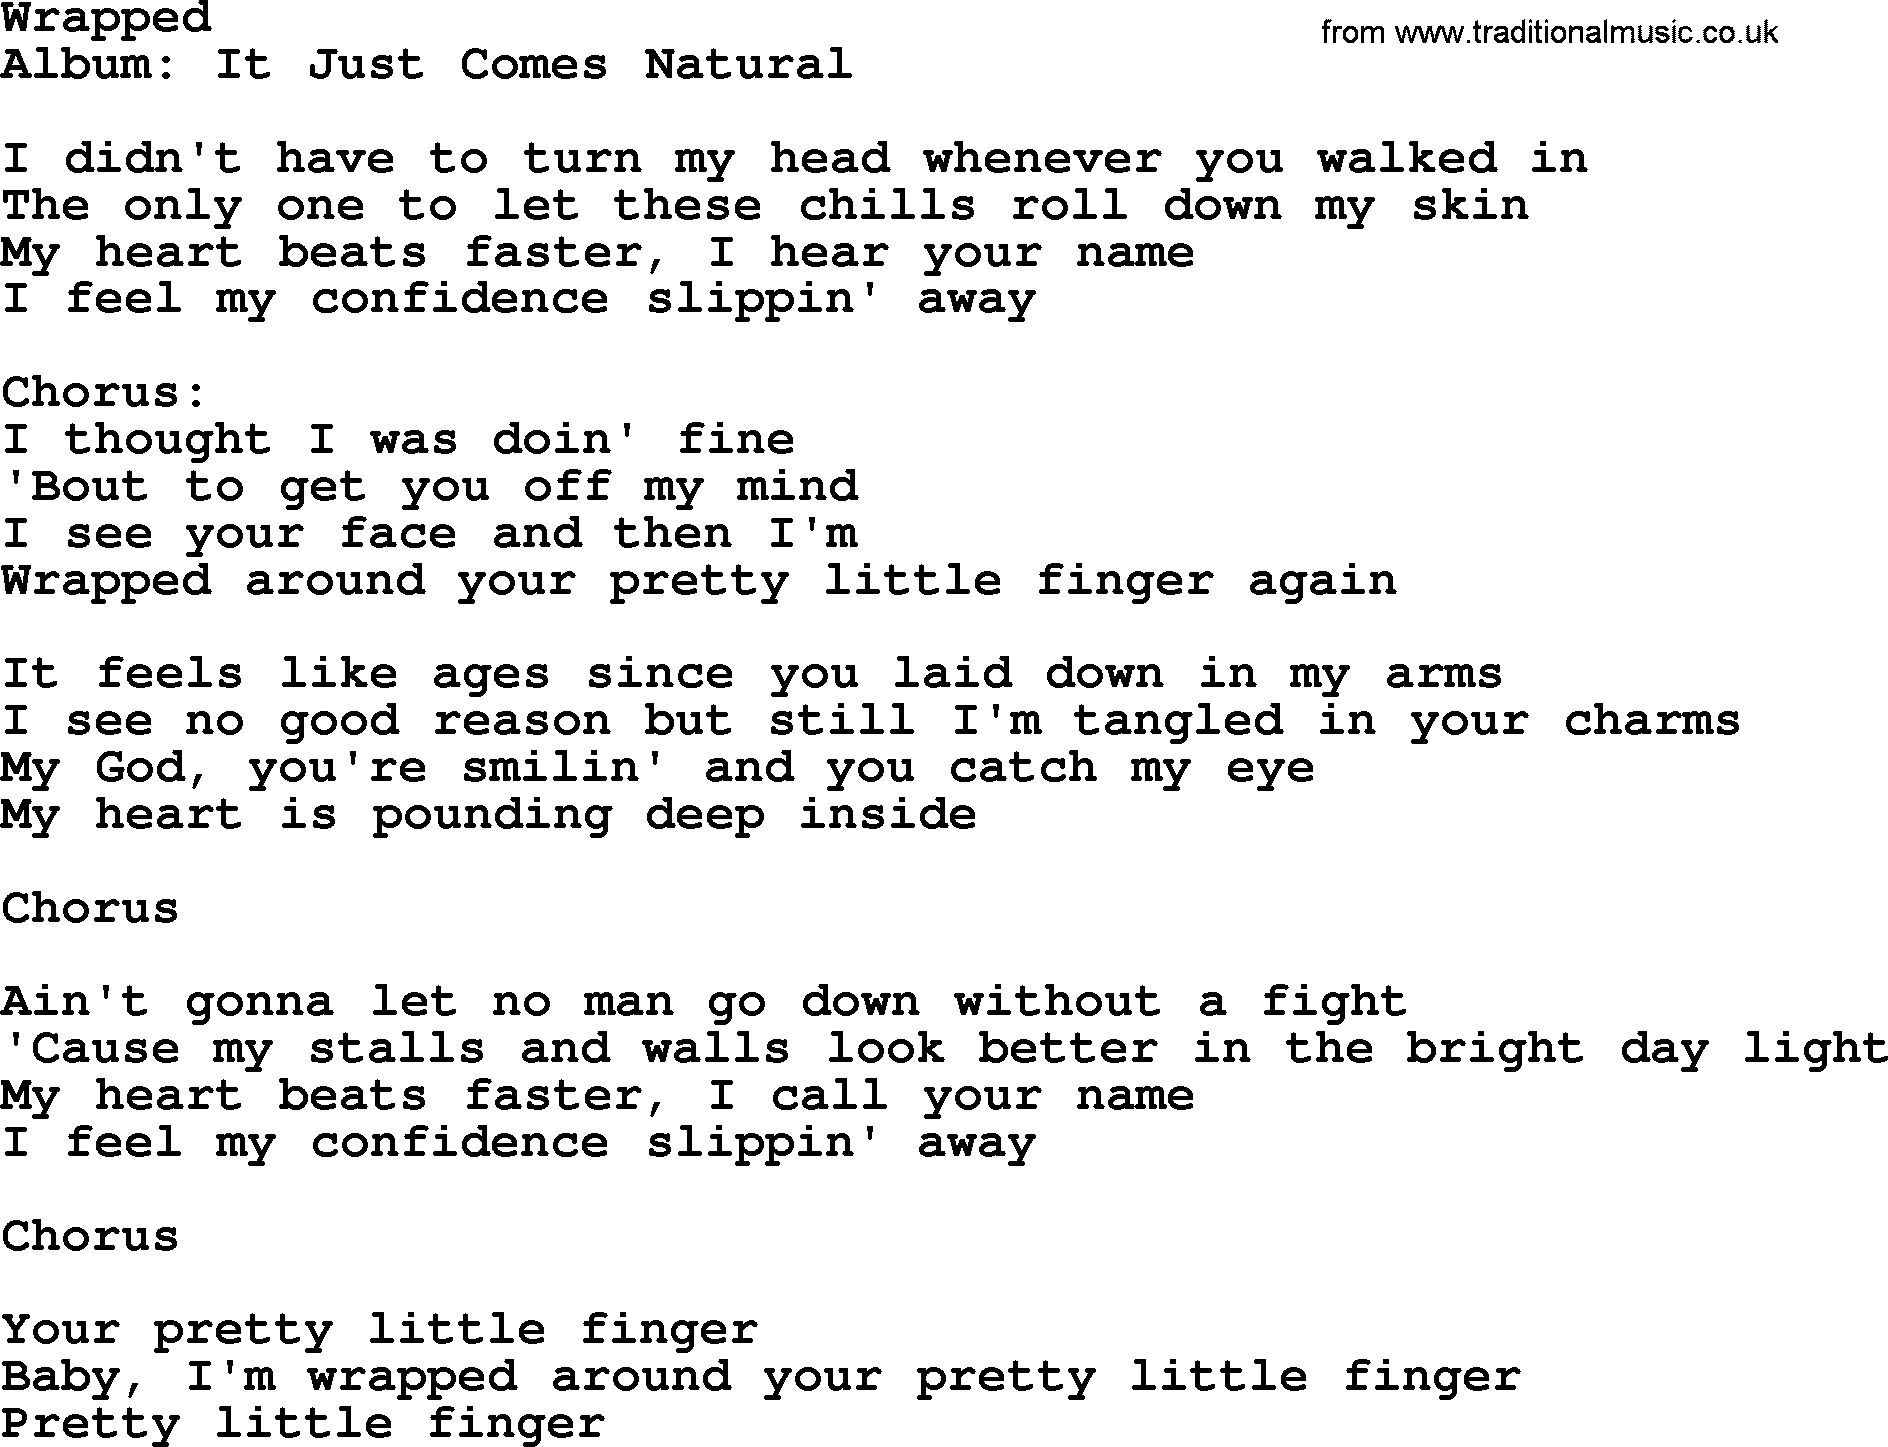 George Strait song: Wrapped, lyrics